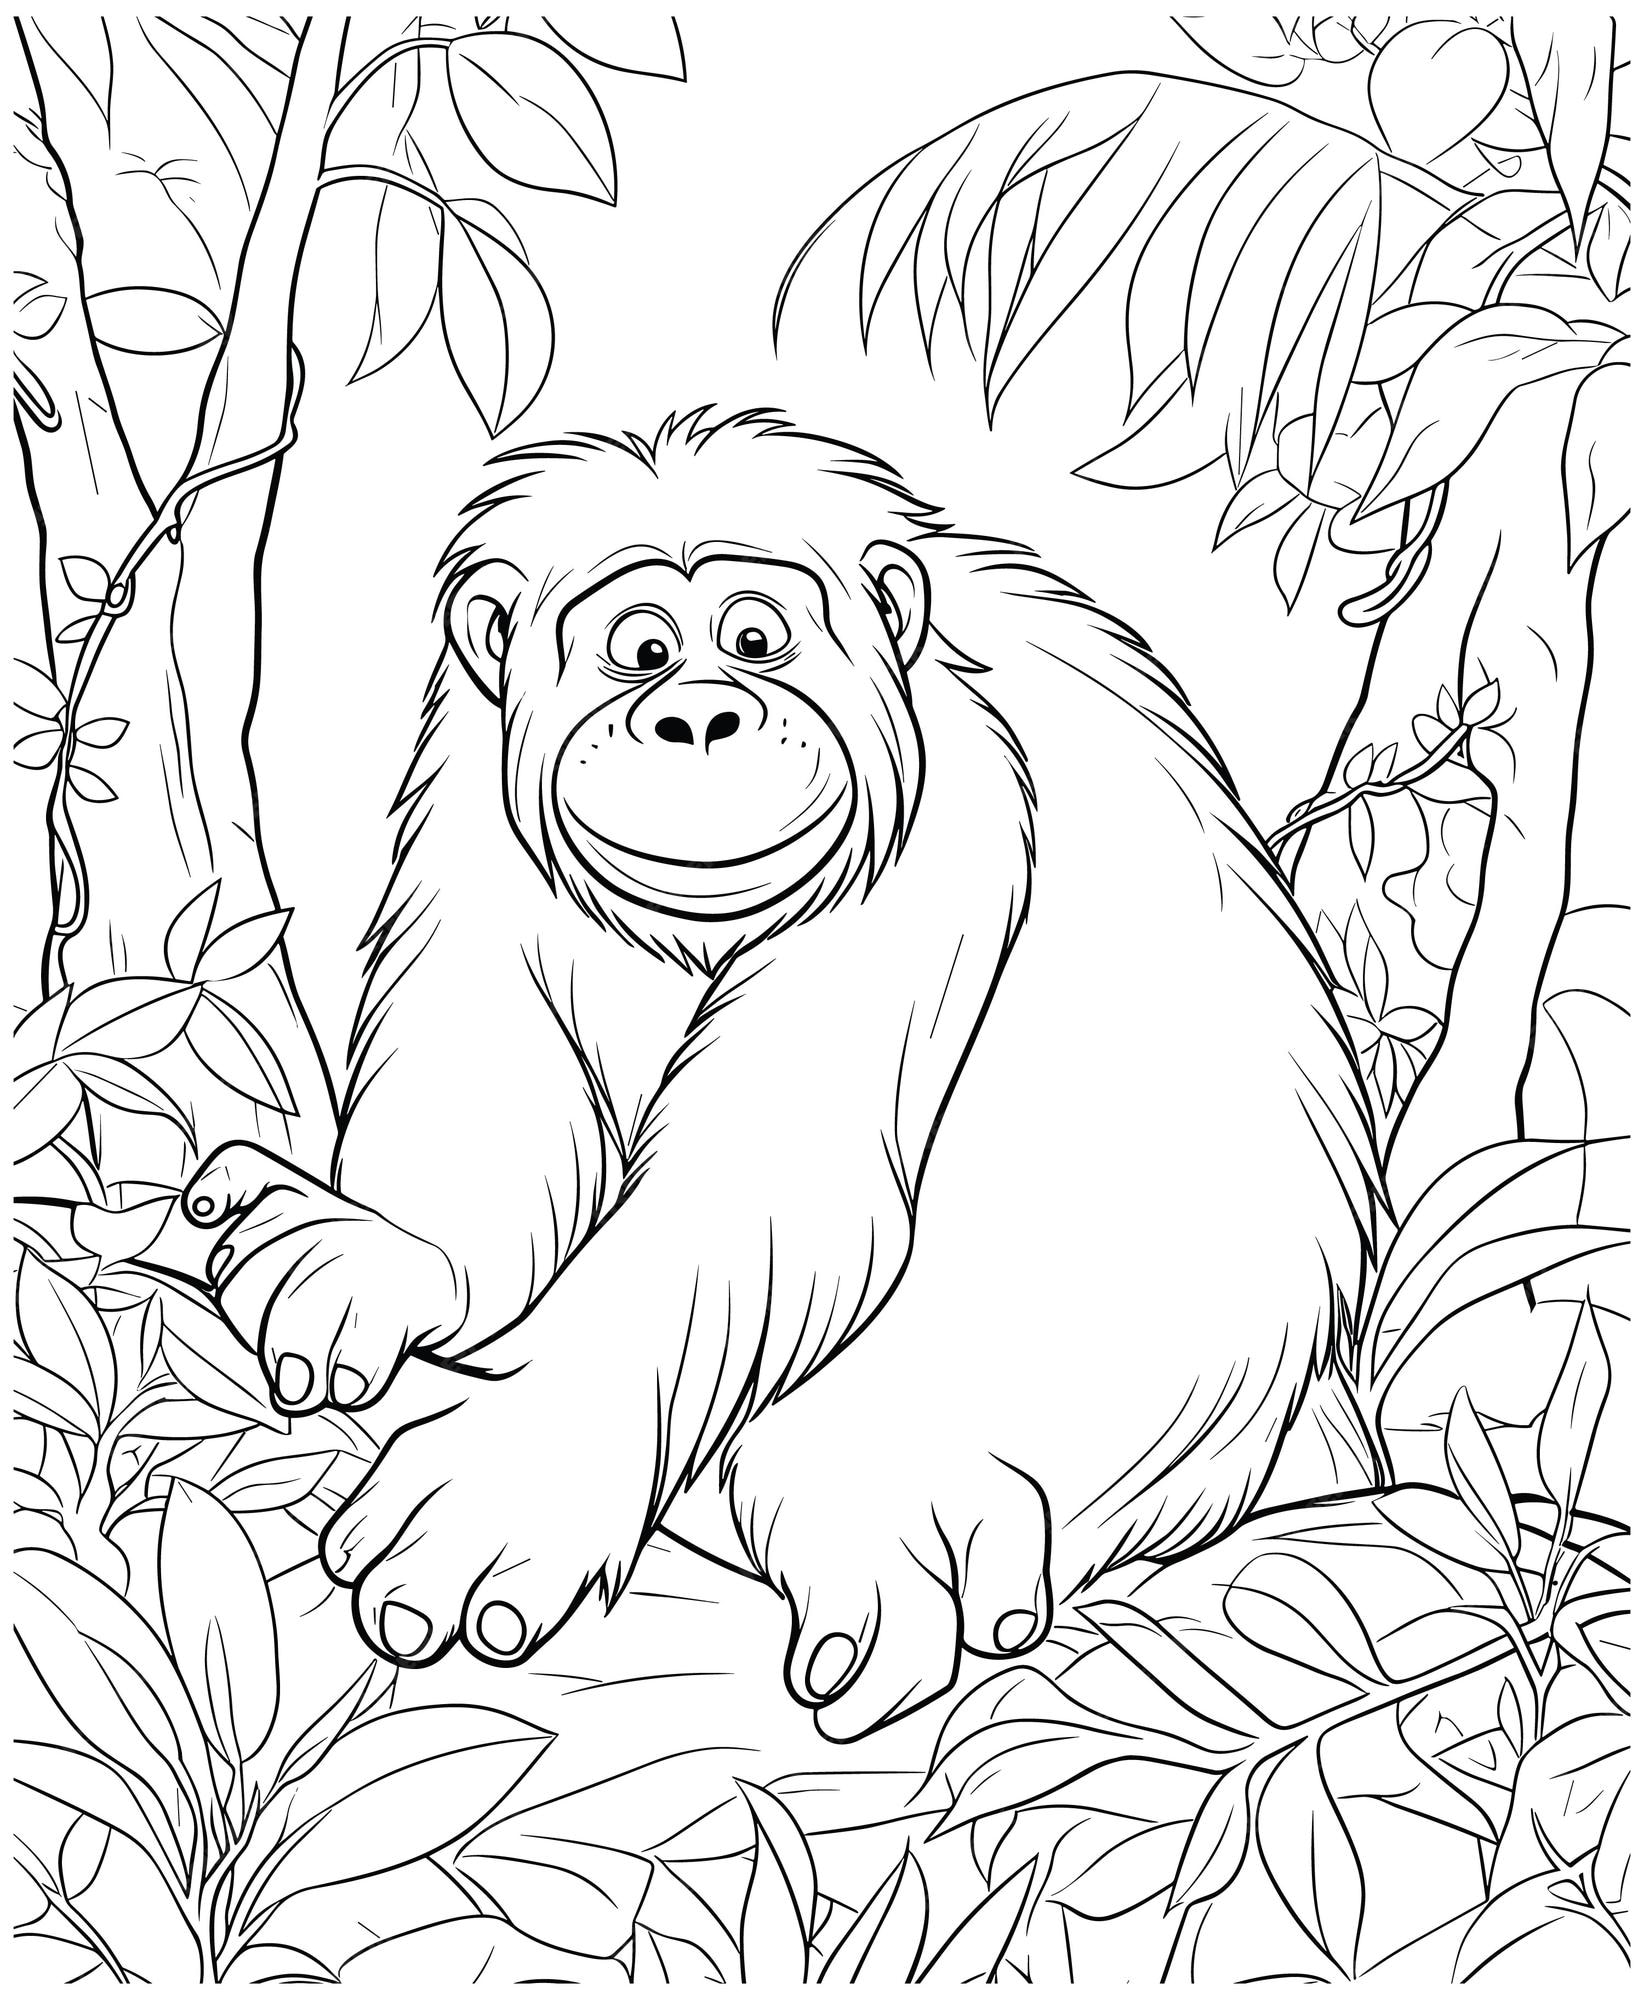 Premium vector orangutan coloring pages for adults